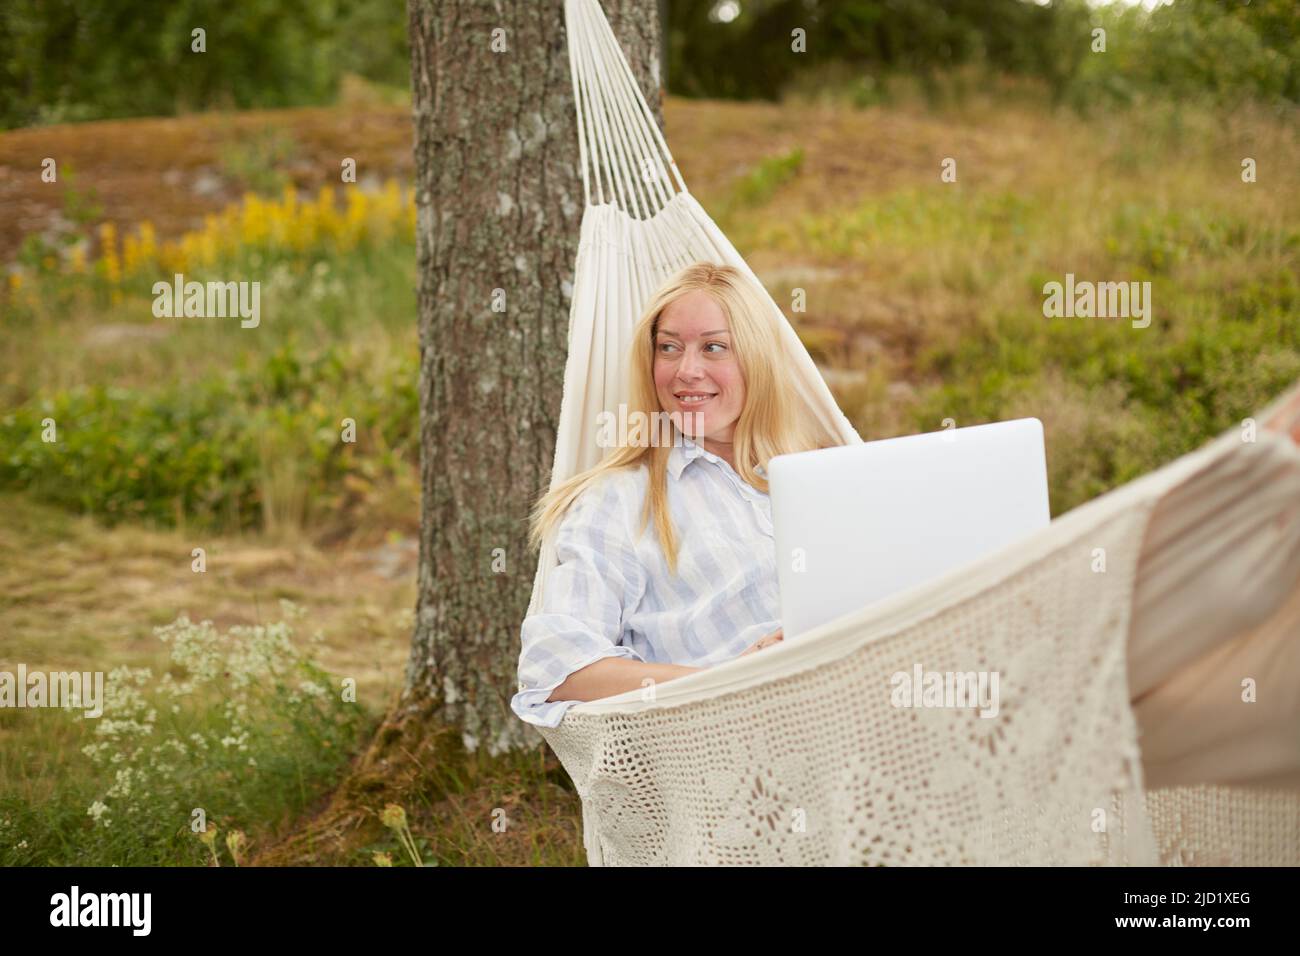 Woman using laptop on hammock Stock Photo